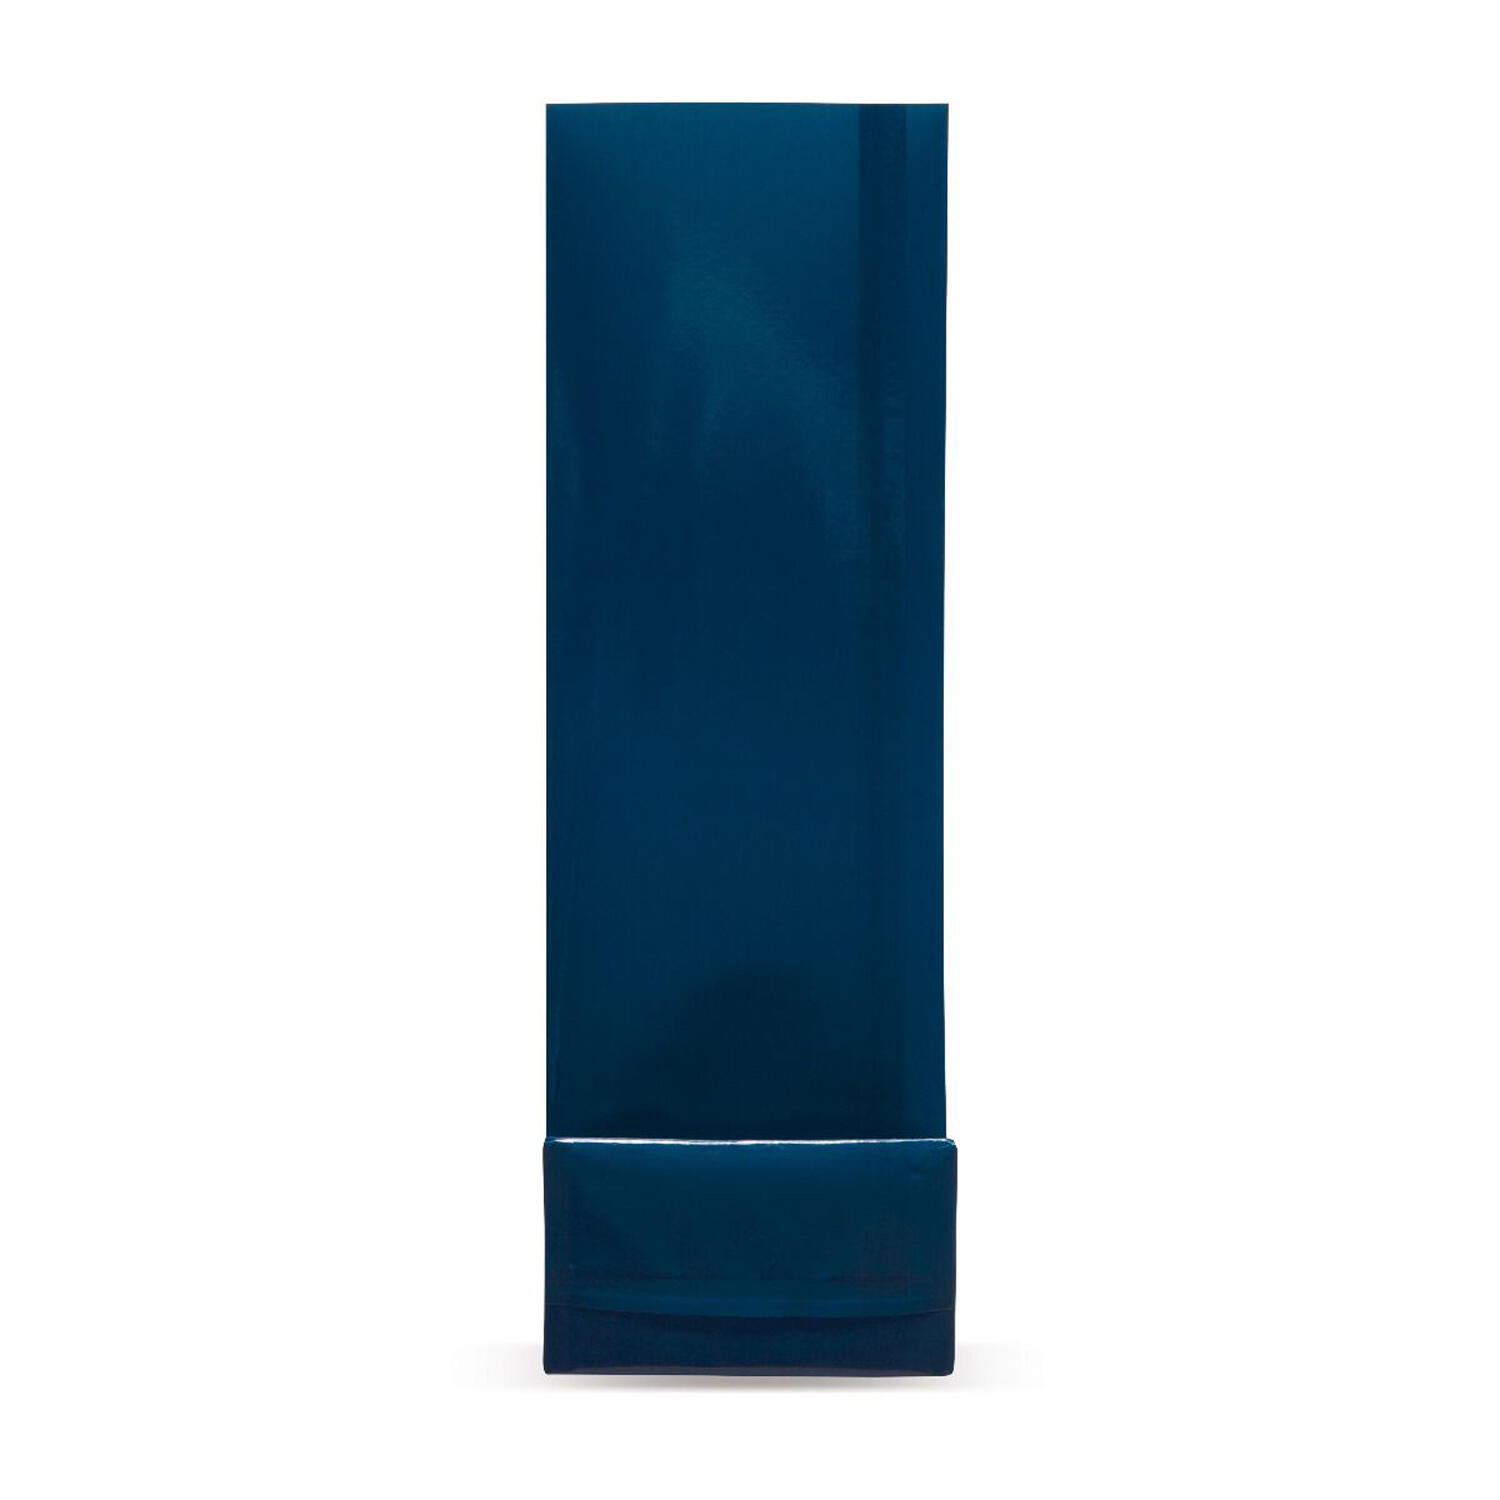 Blockbodenbeutel Blau  55 + 30mm x 175mm 4-lagig, 1000 Stk.